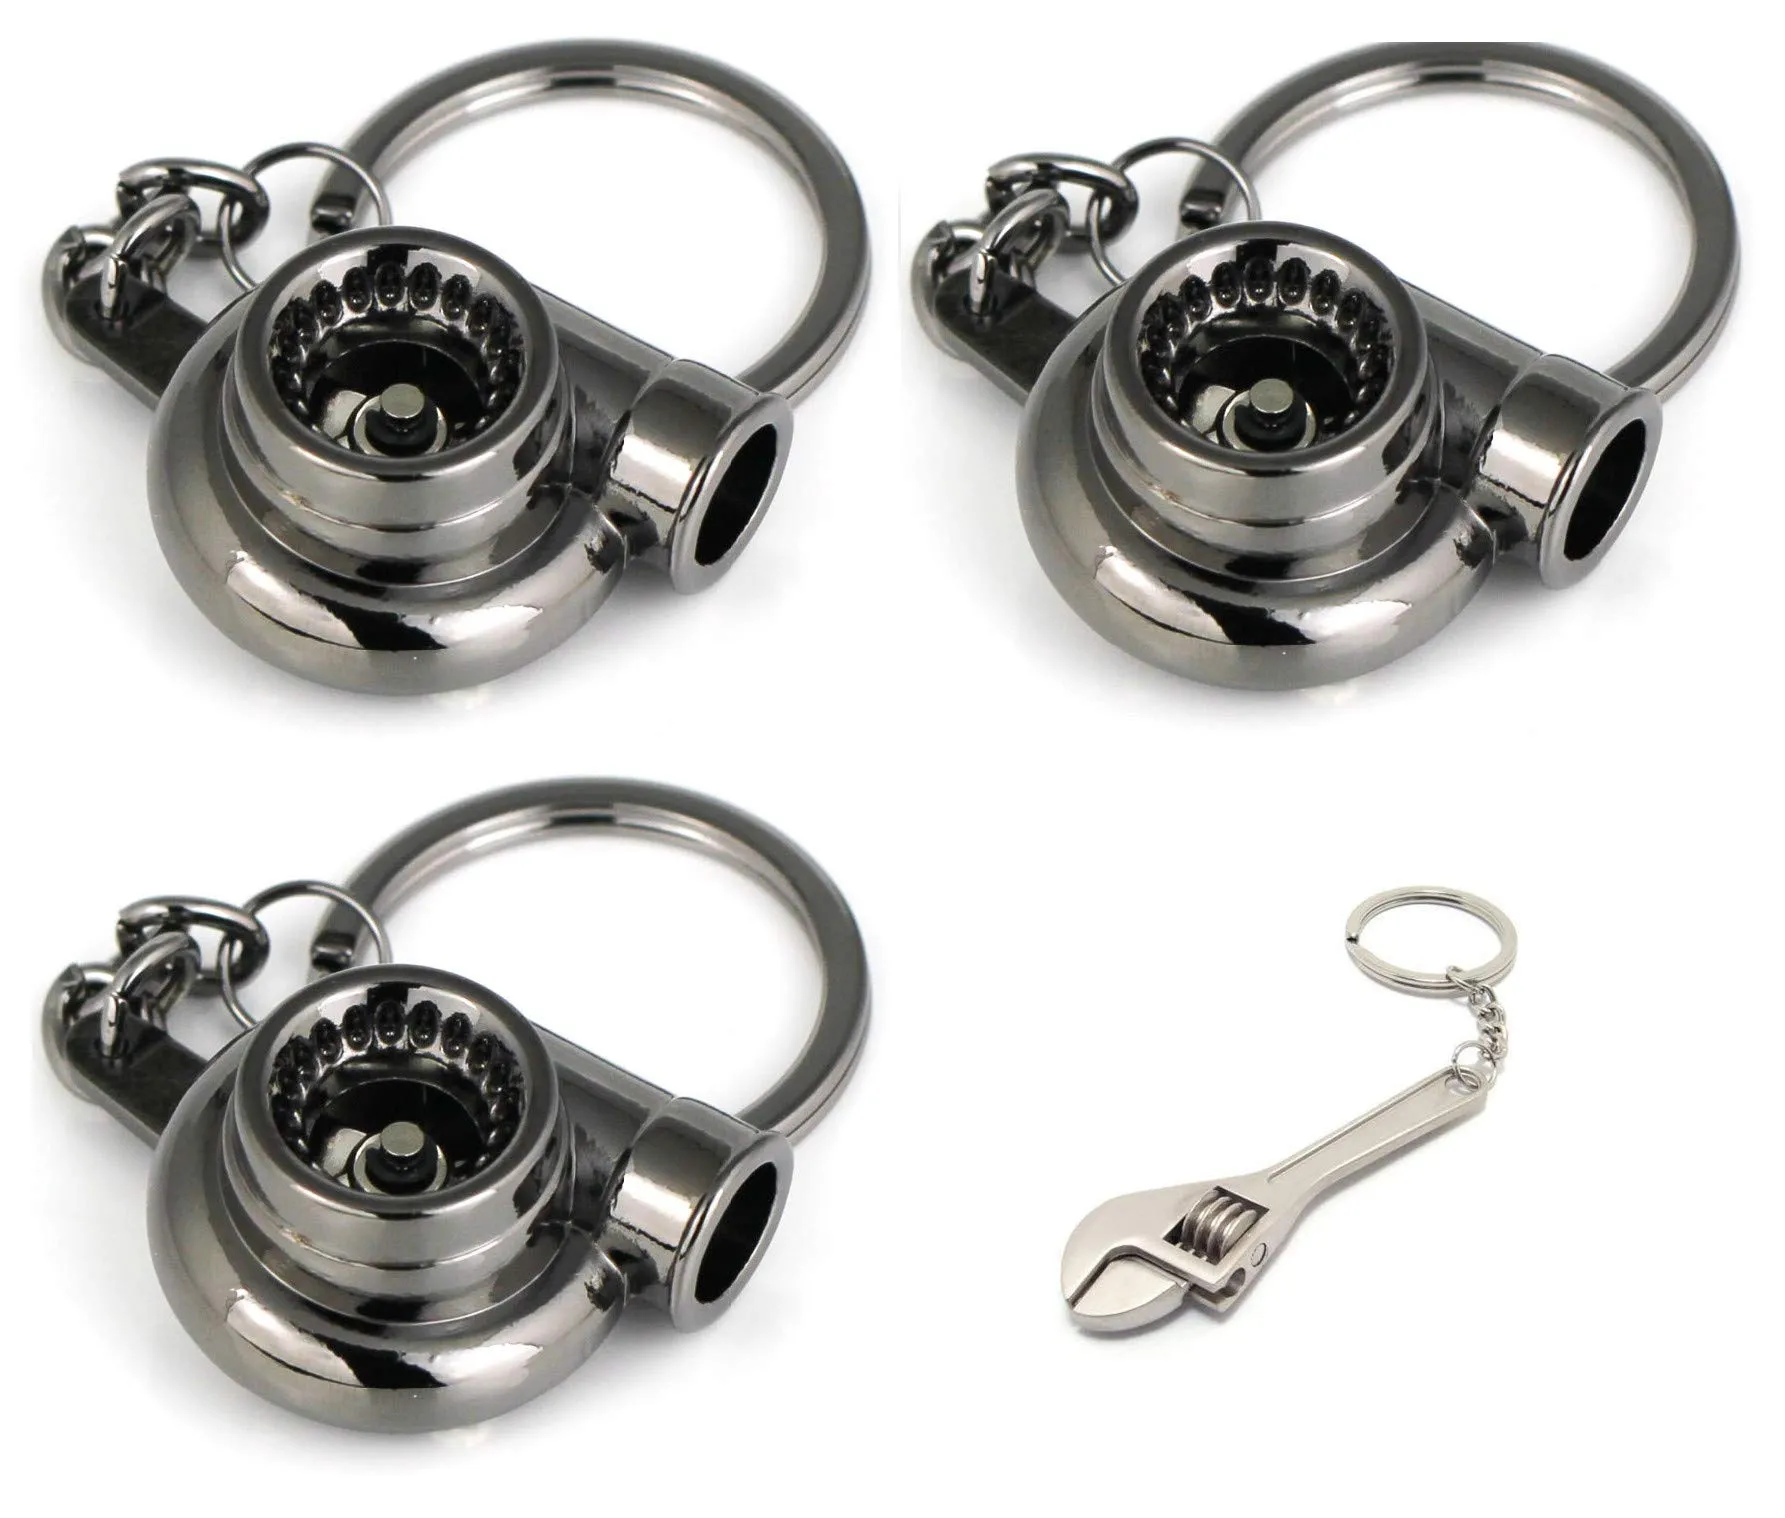 3ml 3pc auto gift set spinning turbo keychain rotor key chain micro wrench keychain